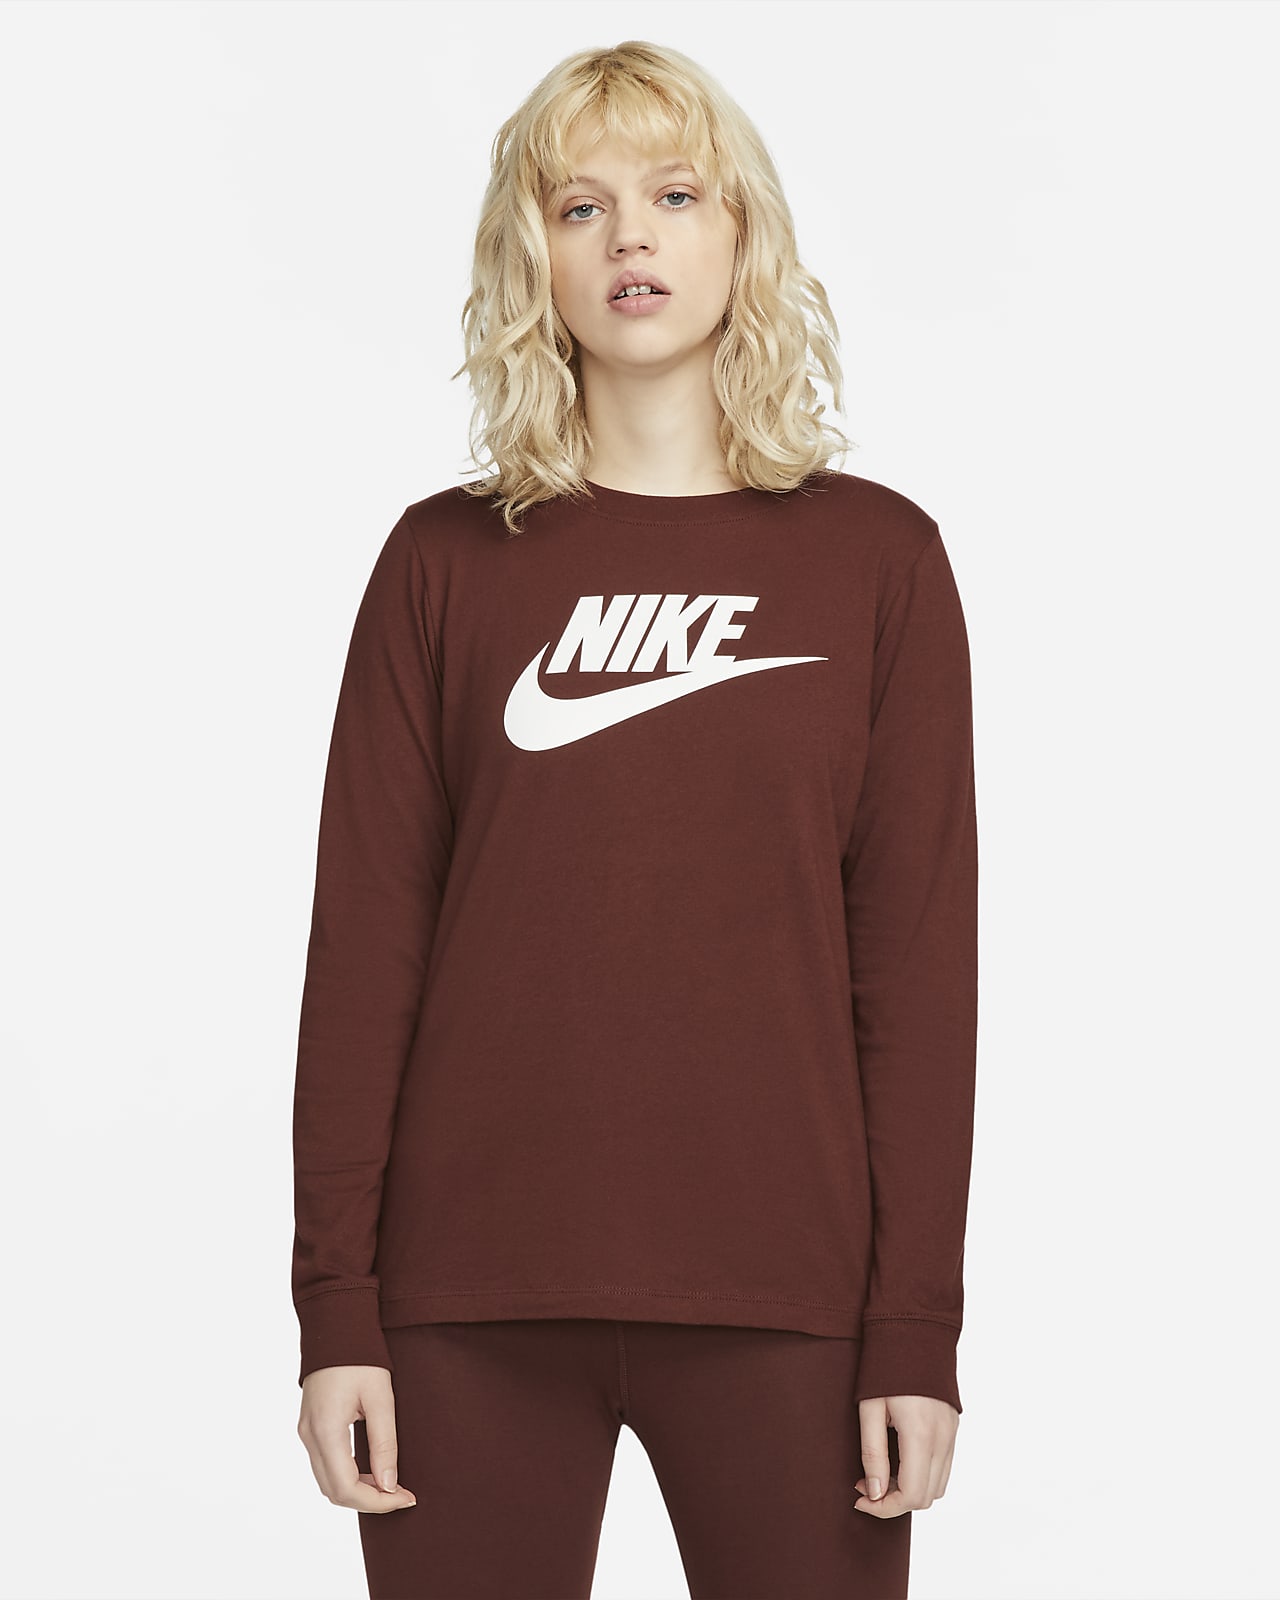 Lírico Desconocido Grande Nike Sportswear Camiseta de manga larga - Mujer. Nike ES